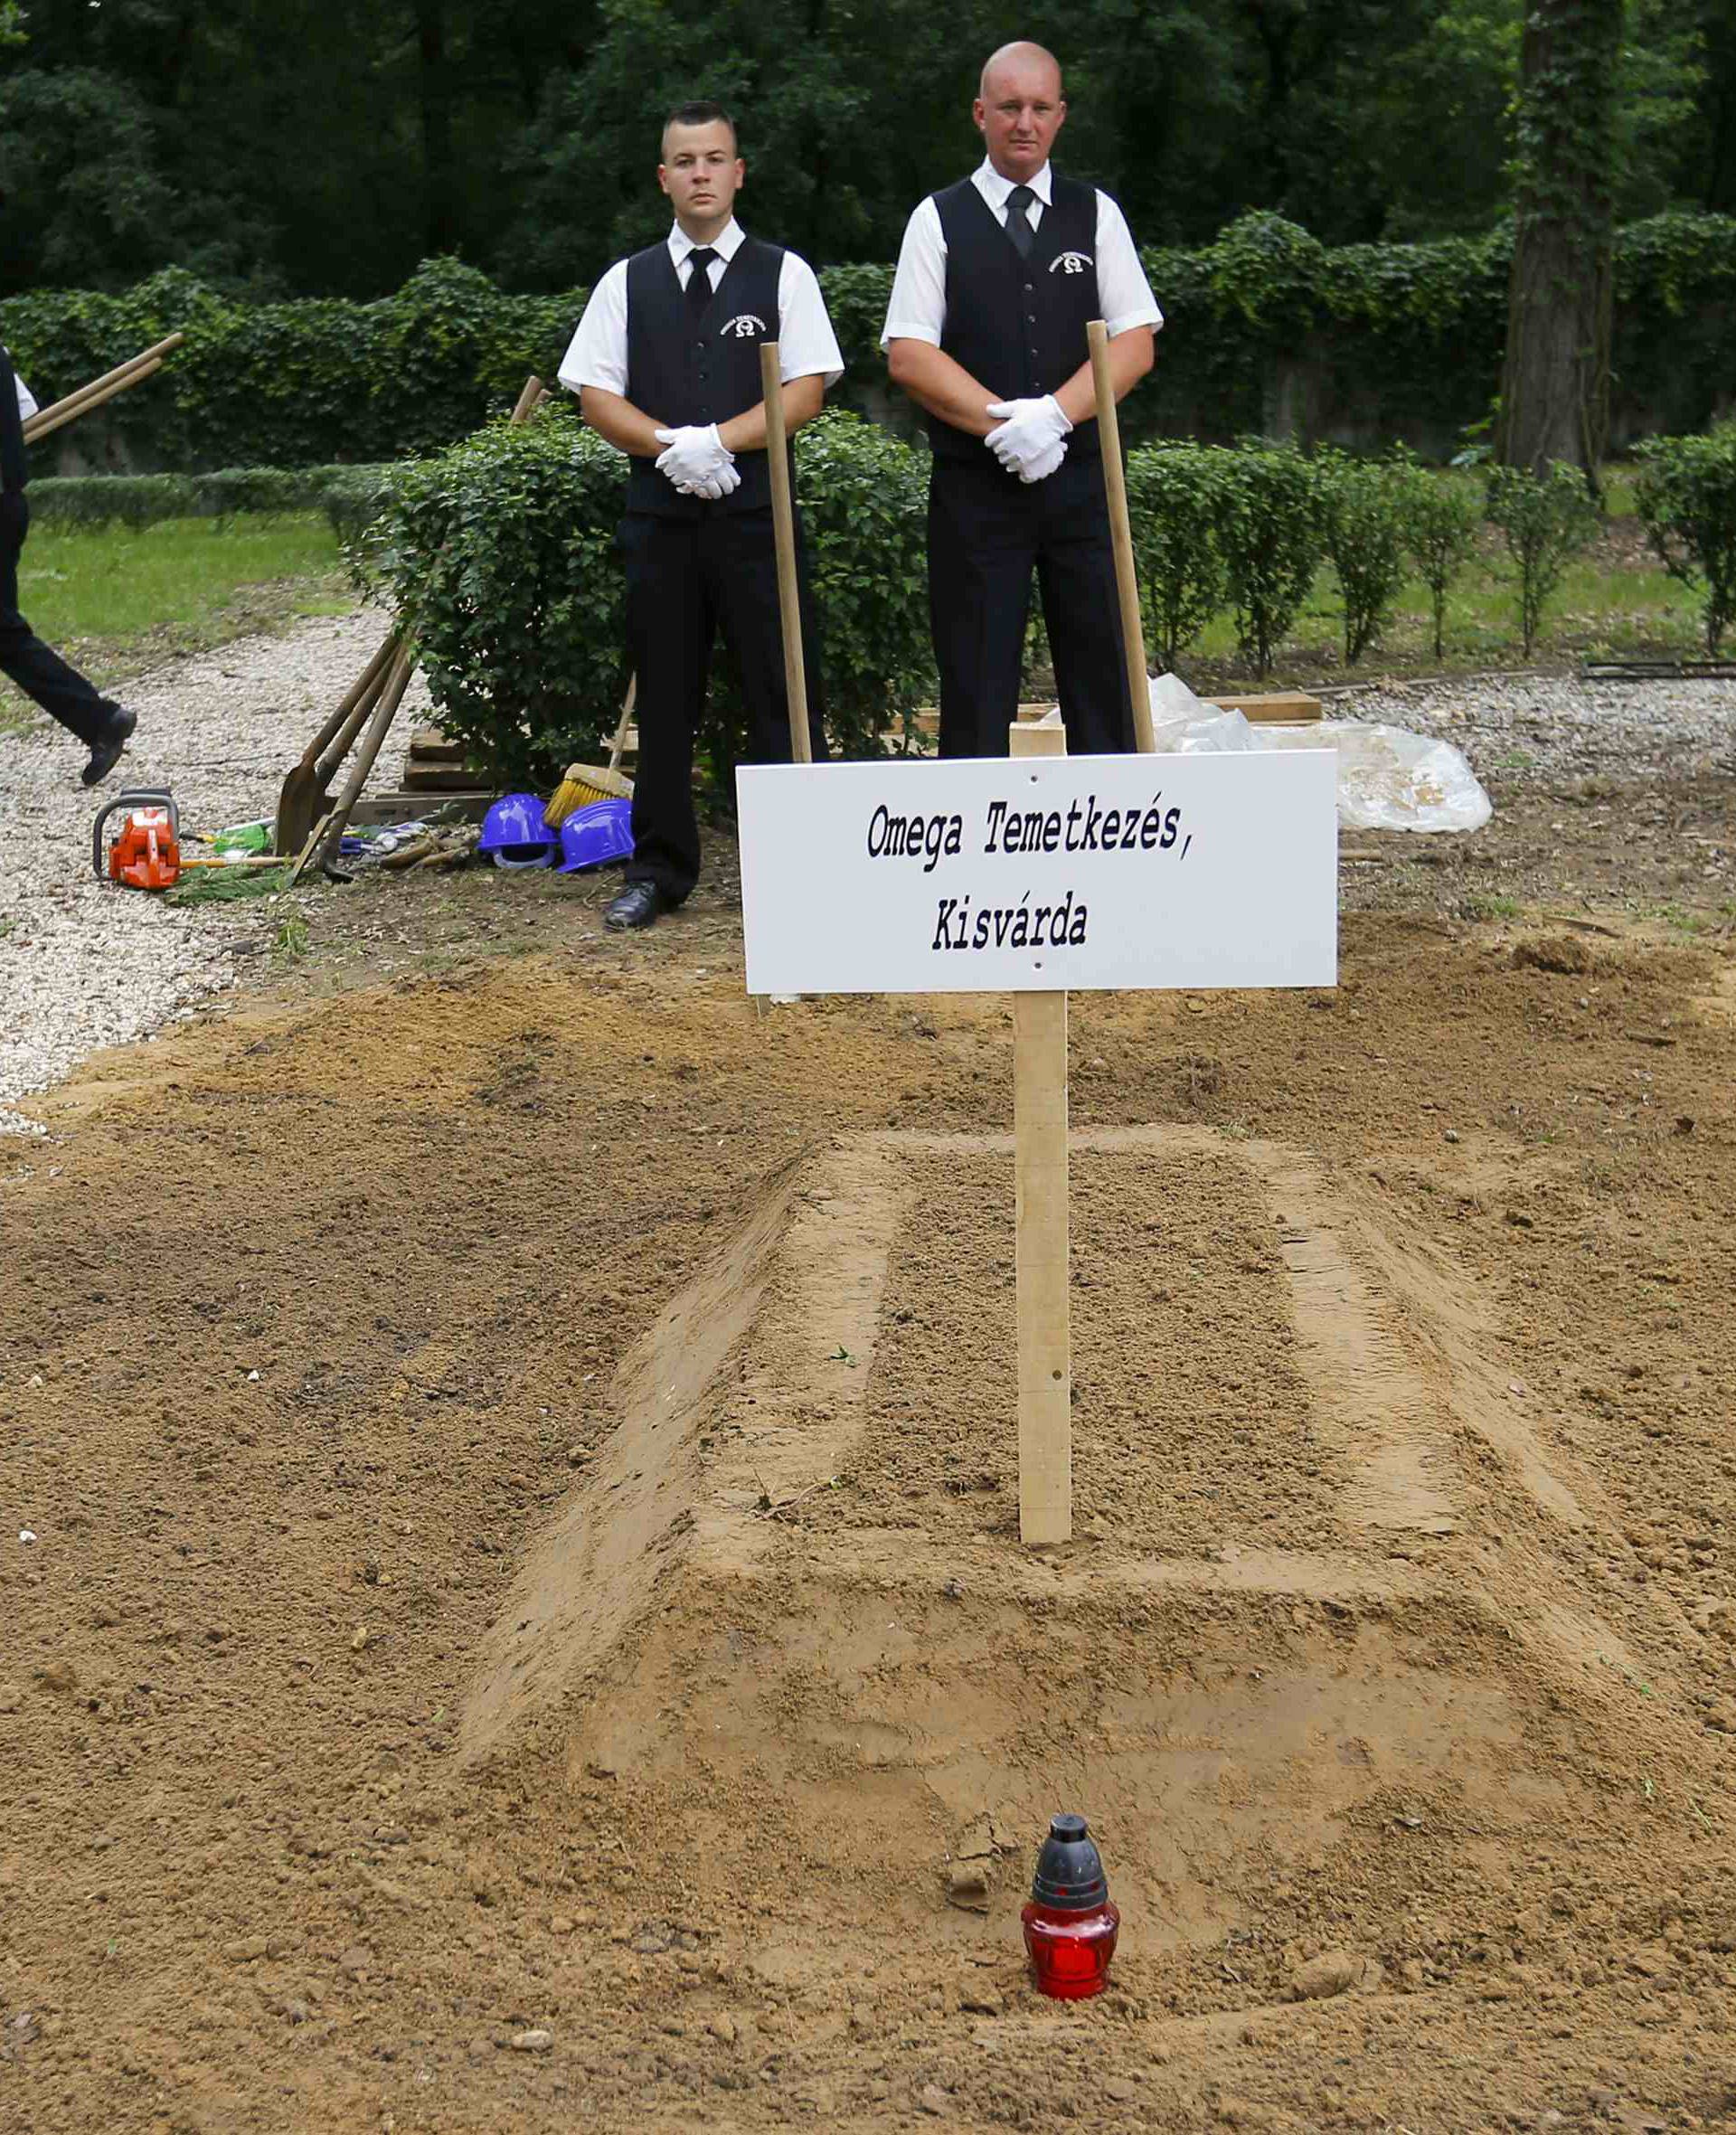 Gravediggers pose after Hungarian grave digging championship in Debrecen